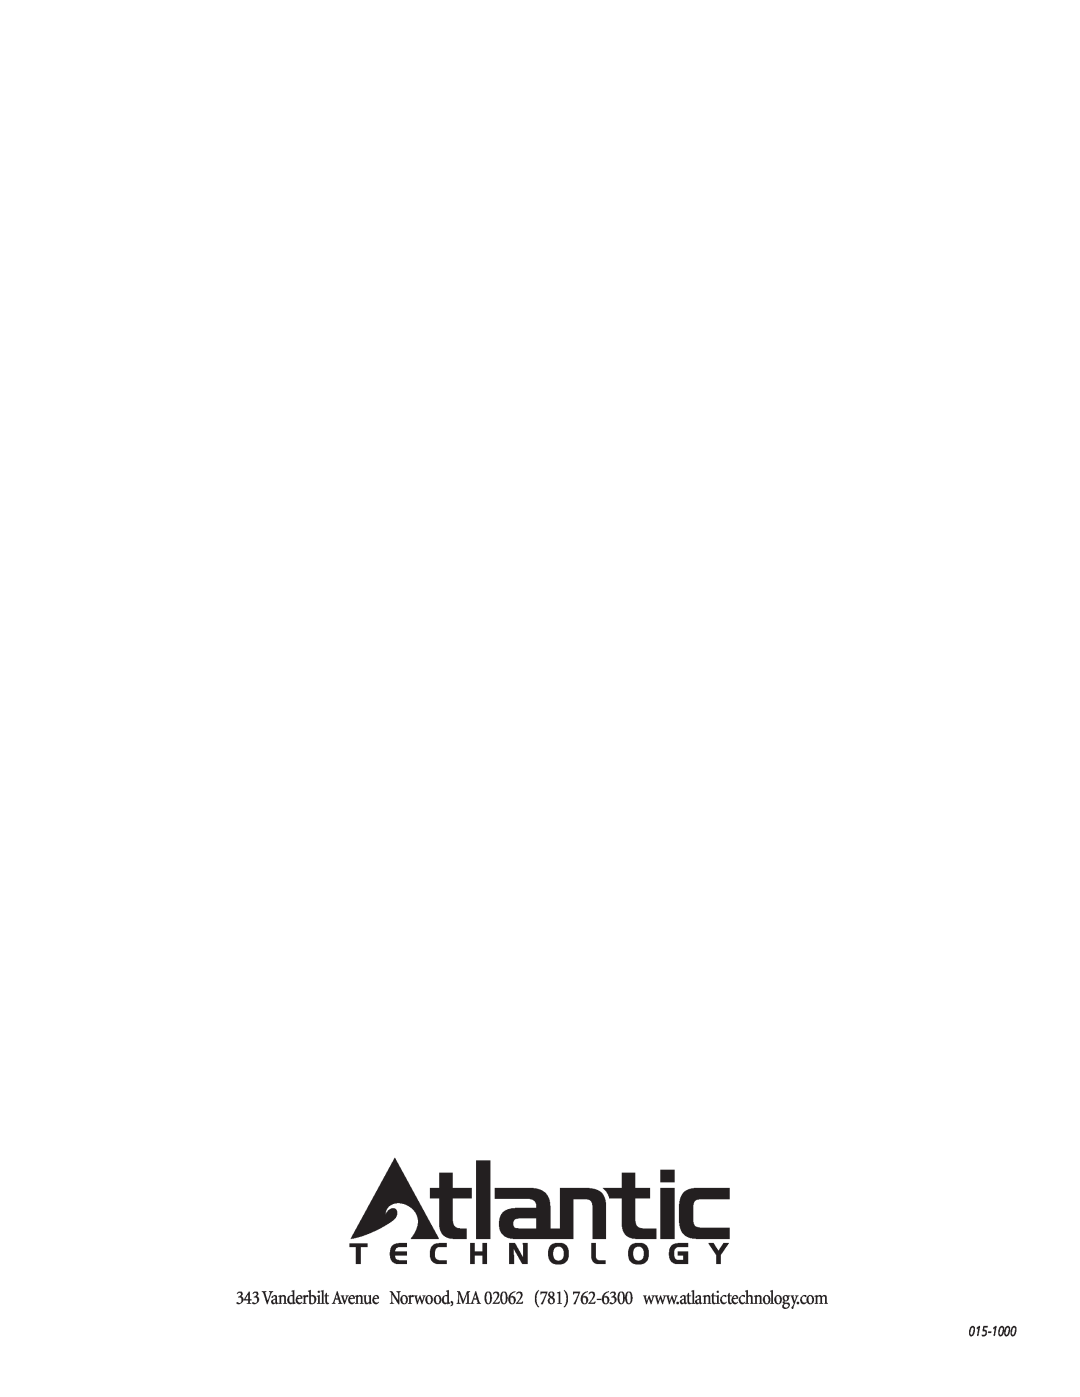 Atlantic Technology IWCB-626, IWCB-525 instruction manual 015-1000 